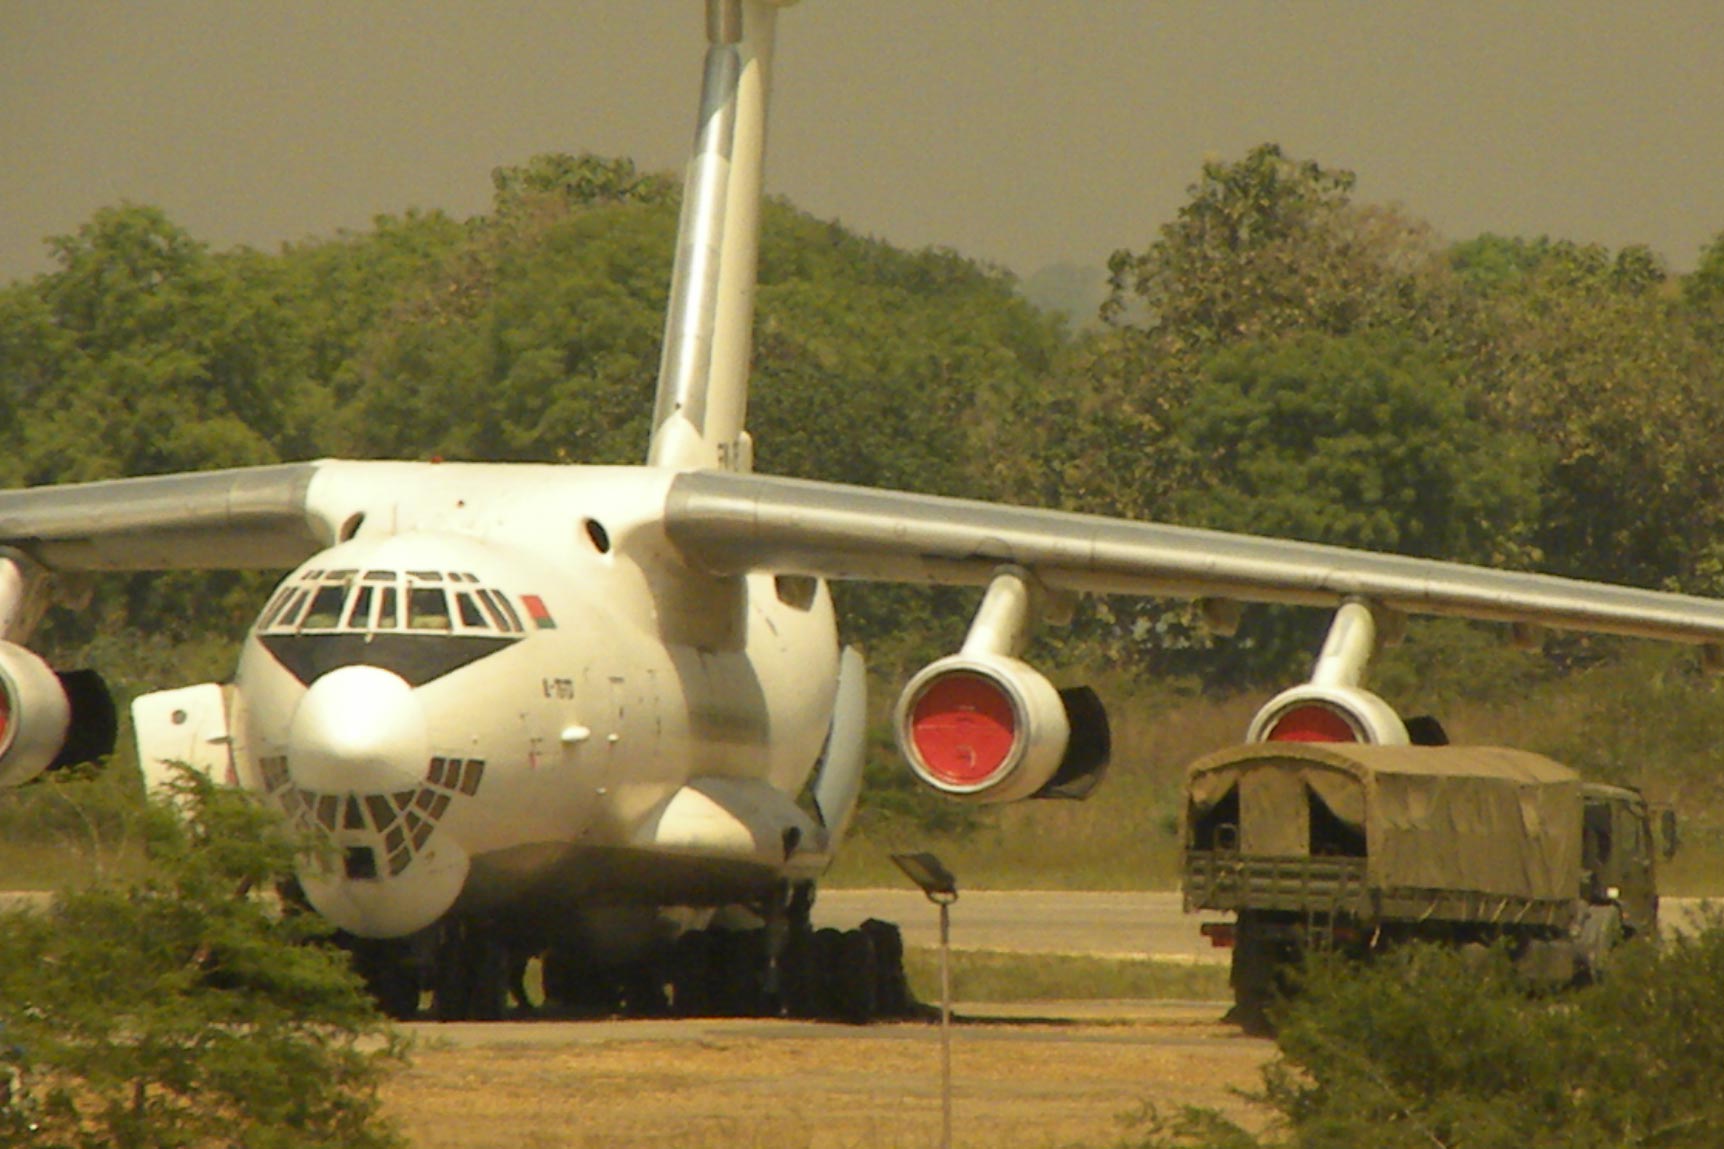 Ilyushin-76 aircraft off-loading ammunition crates in Juba